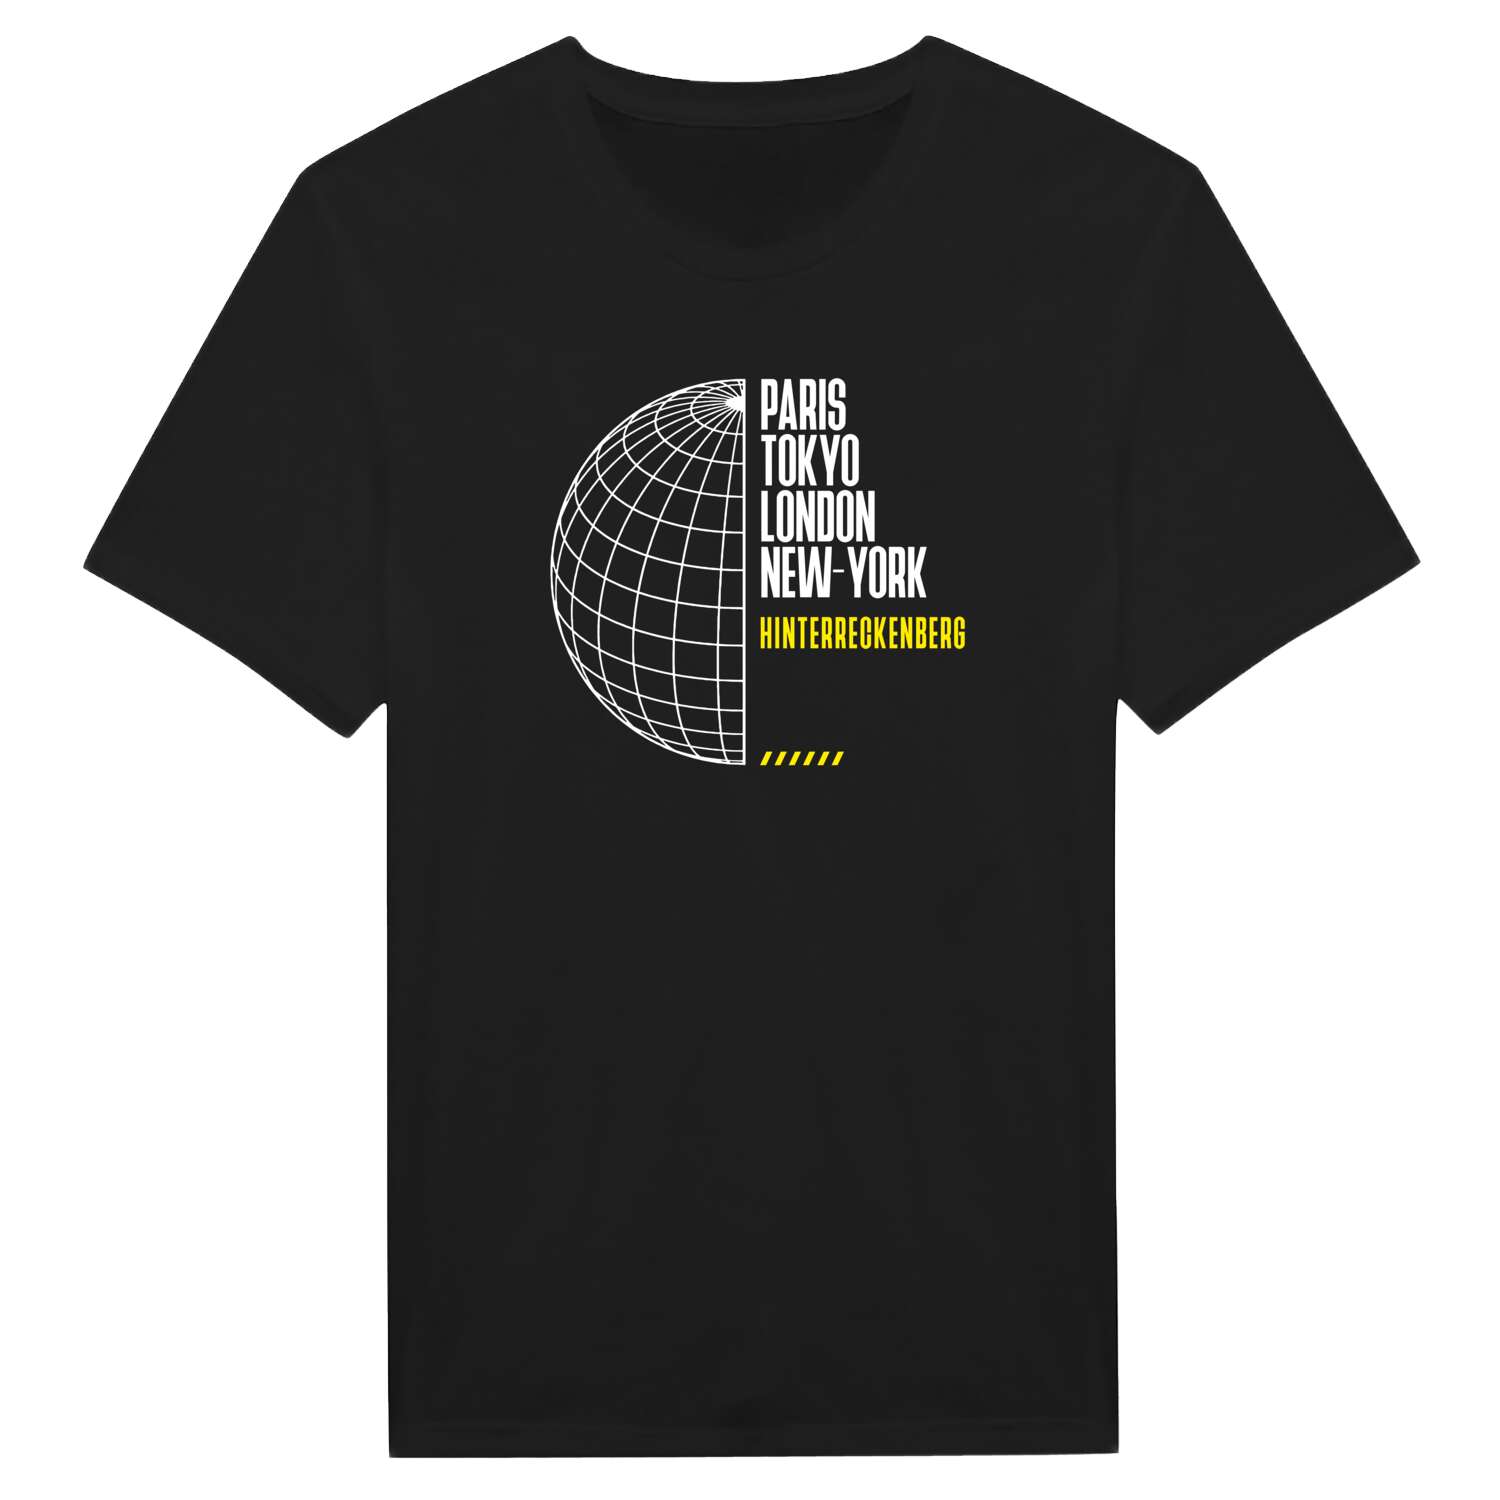 Hinterreckenberg T-Shirt »Paris Tokyo London«